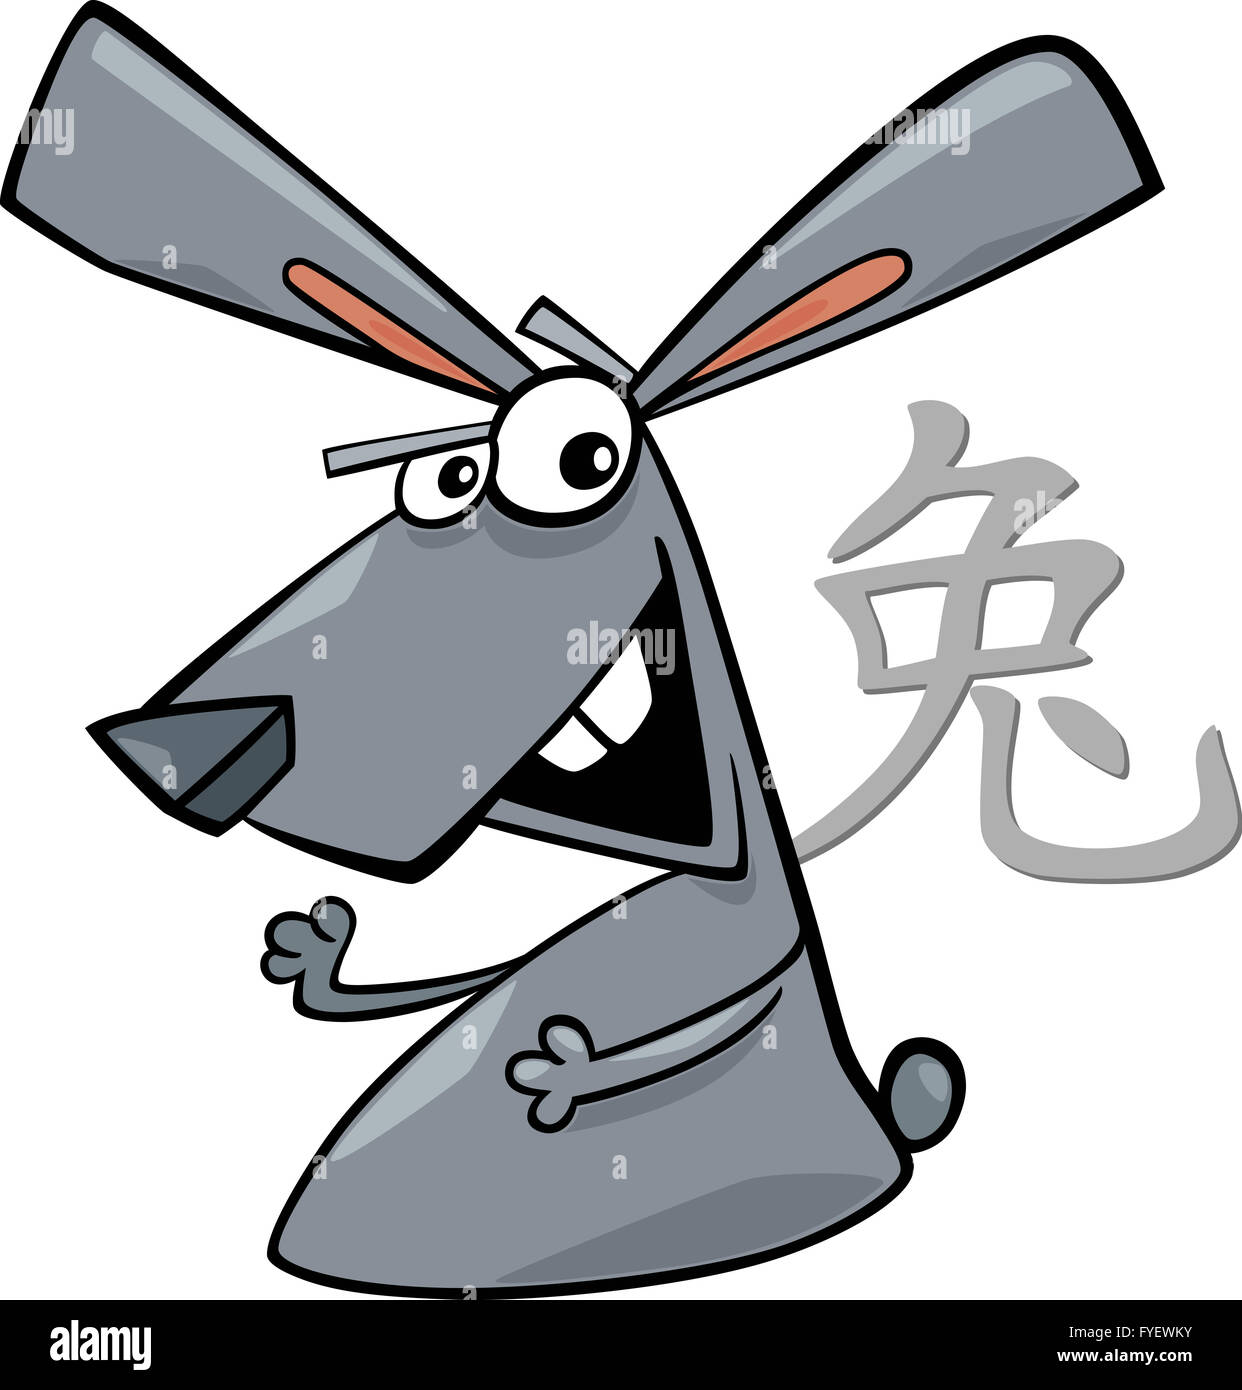 Rabbit Chinese horoscope sign Stock Photo Alamy